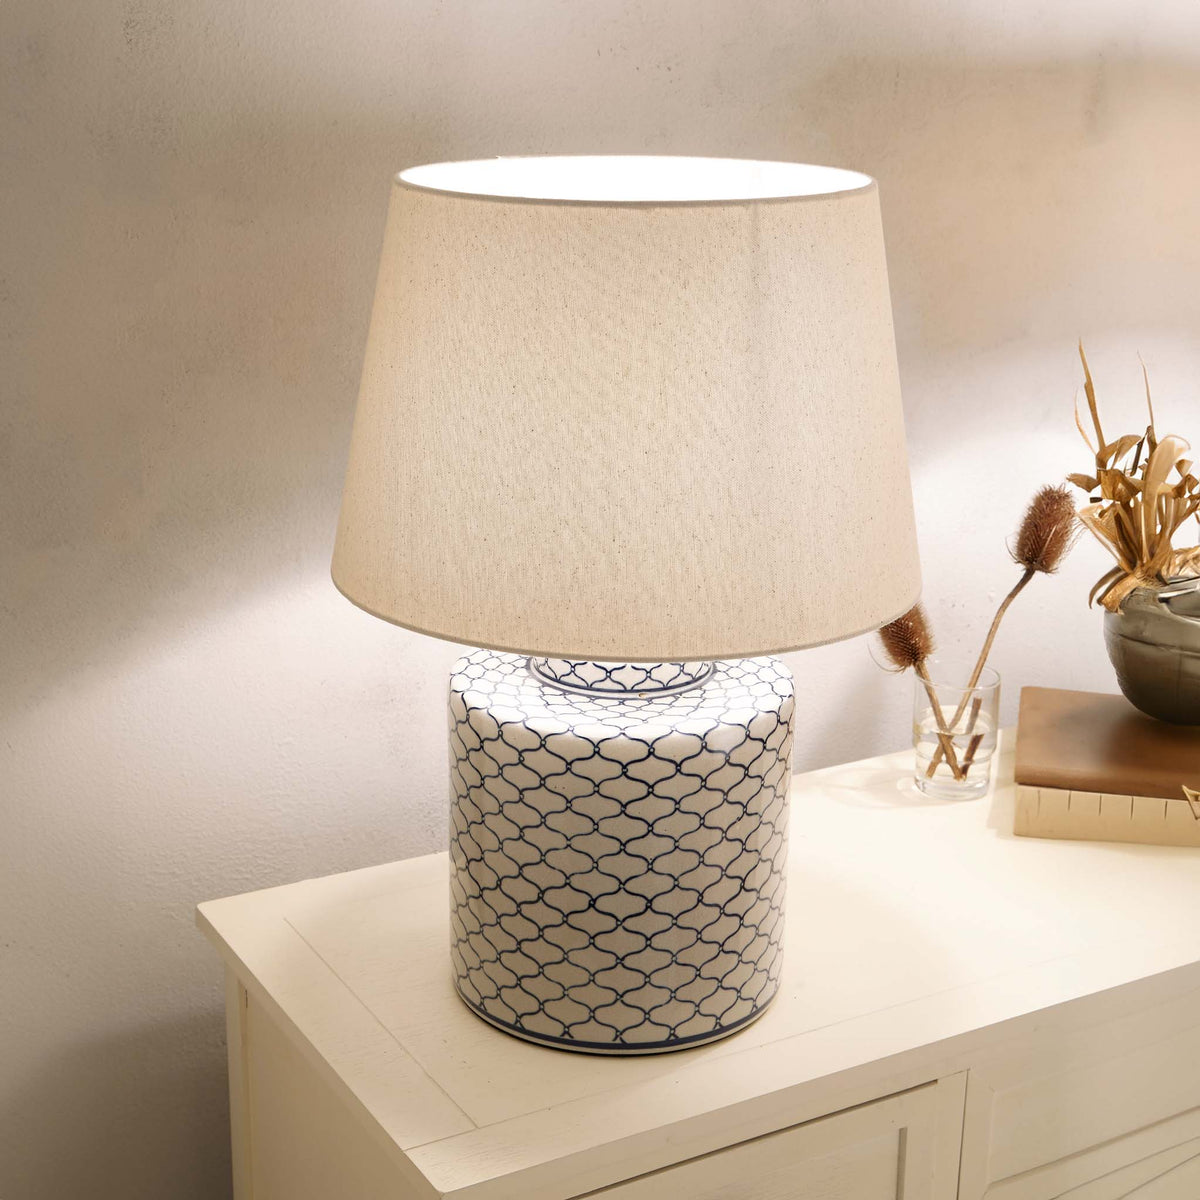 Demetri Grey and Blue Detail Ceramic Table Lamp for bedroom